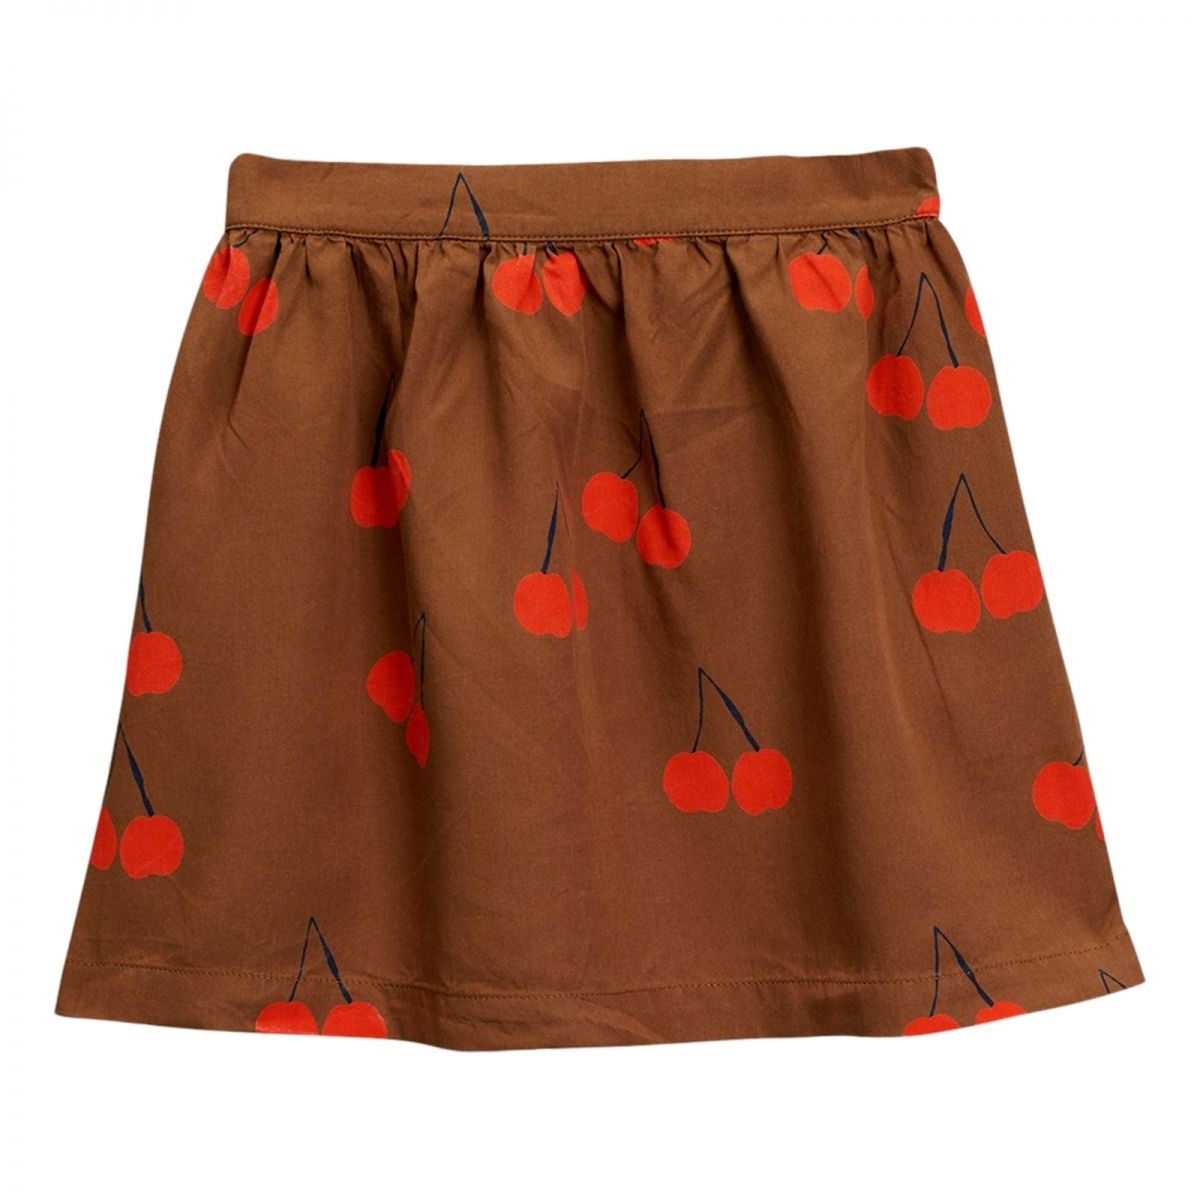 Mini Rodini - Cherry woven skirt brown - Jupes - 1973012016 